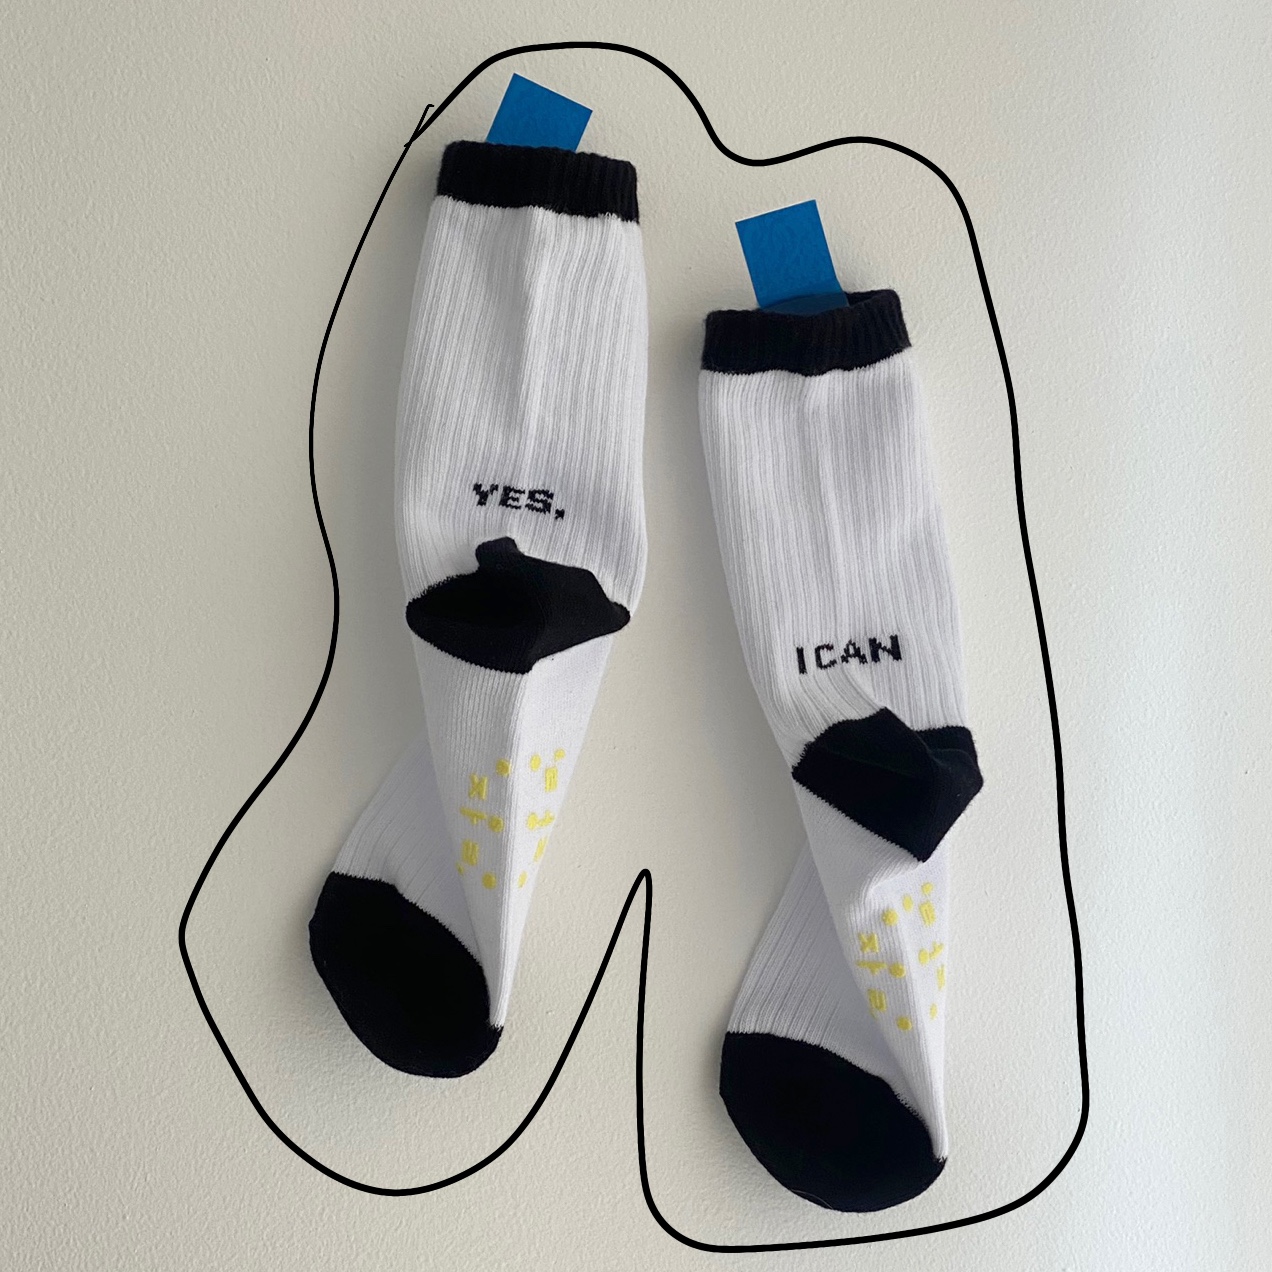 YES, I CAN socks